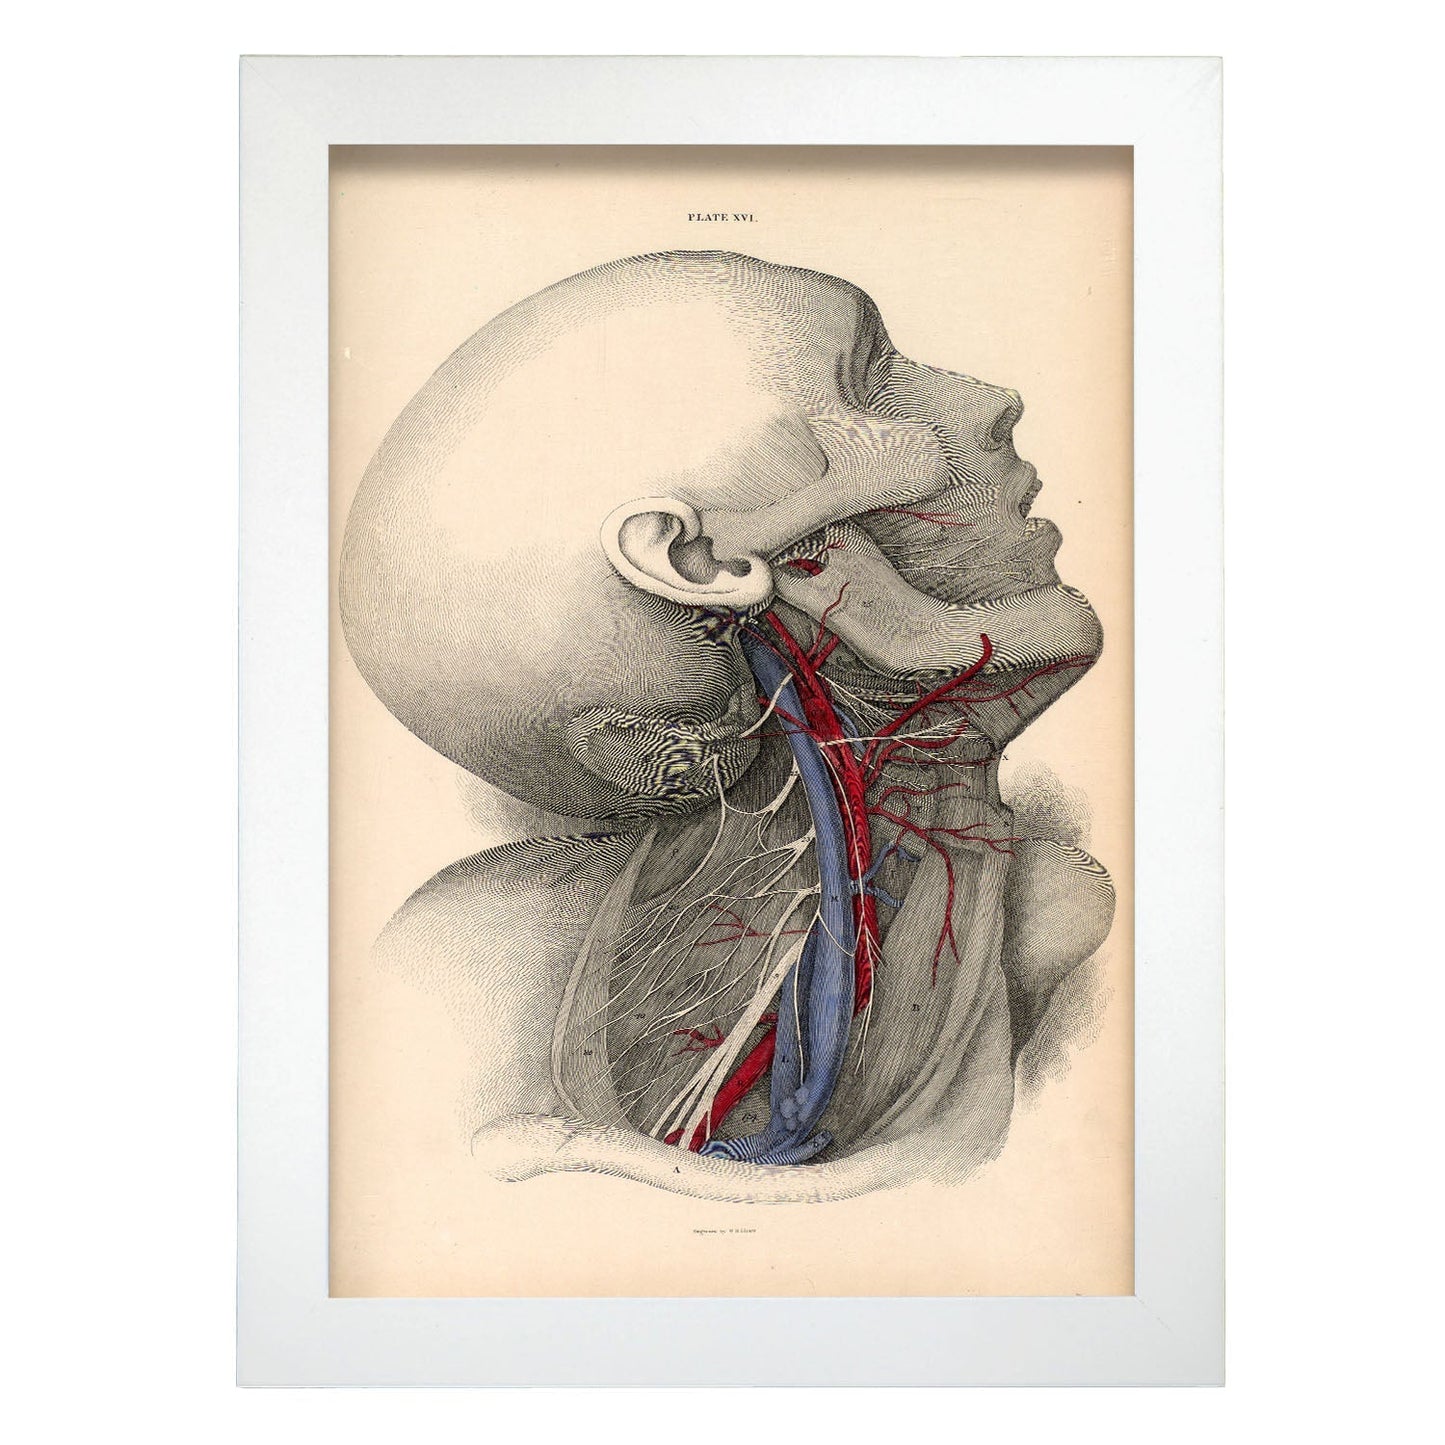 Dissection of the neck-Artwork-Nacnic-A4-Marco Blanco-Nacnic Estudio SL